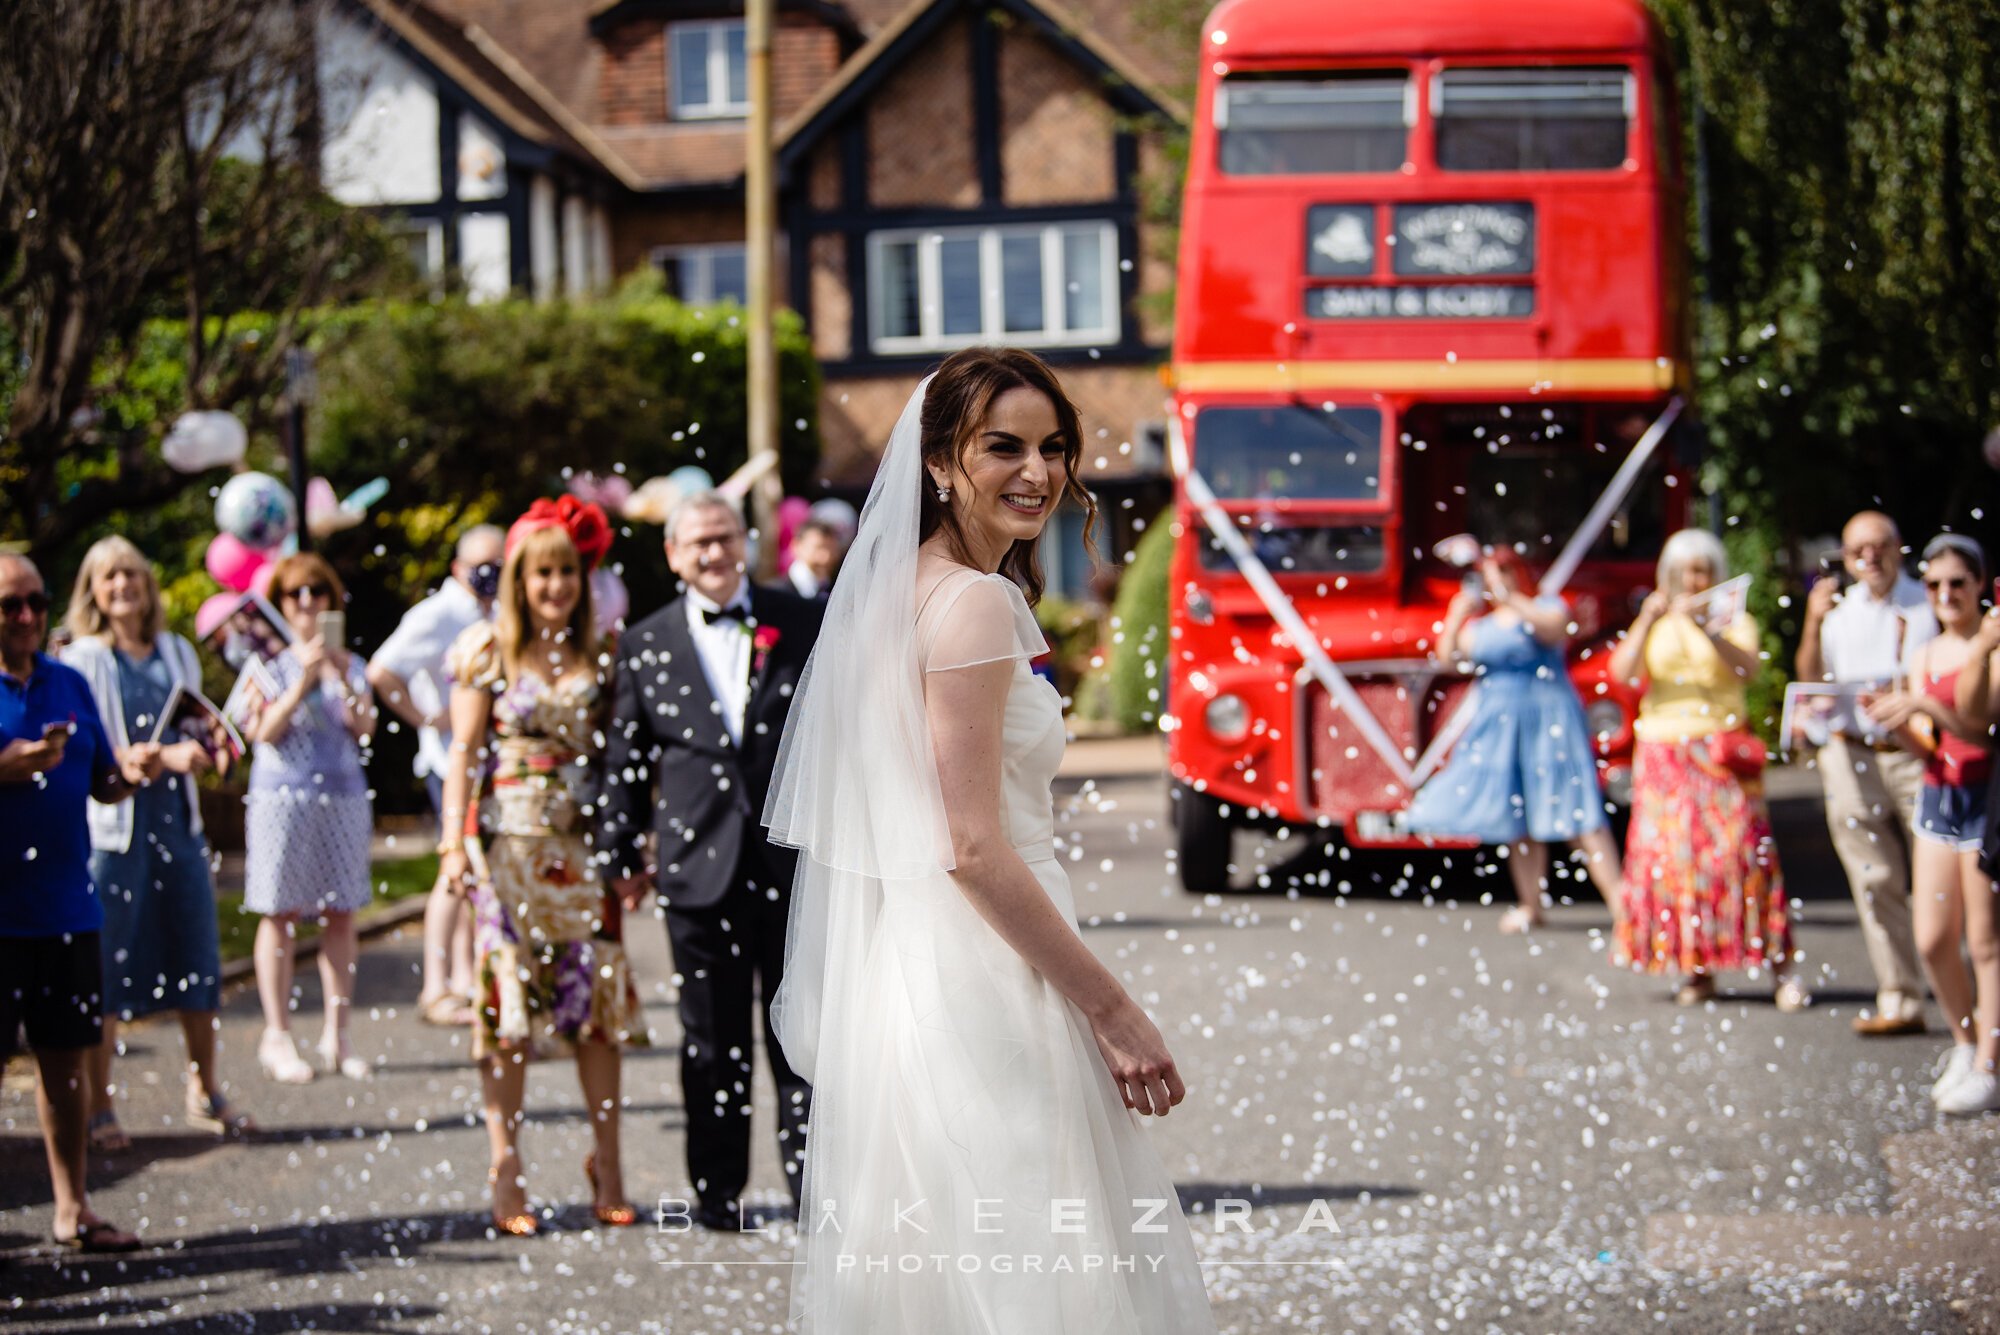 Beautiful bride Samantha wore a wedding dress by Halfpenny London